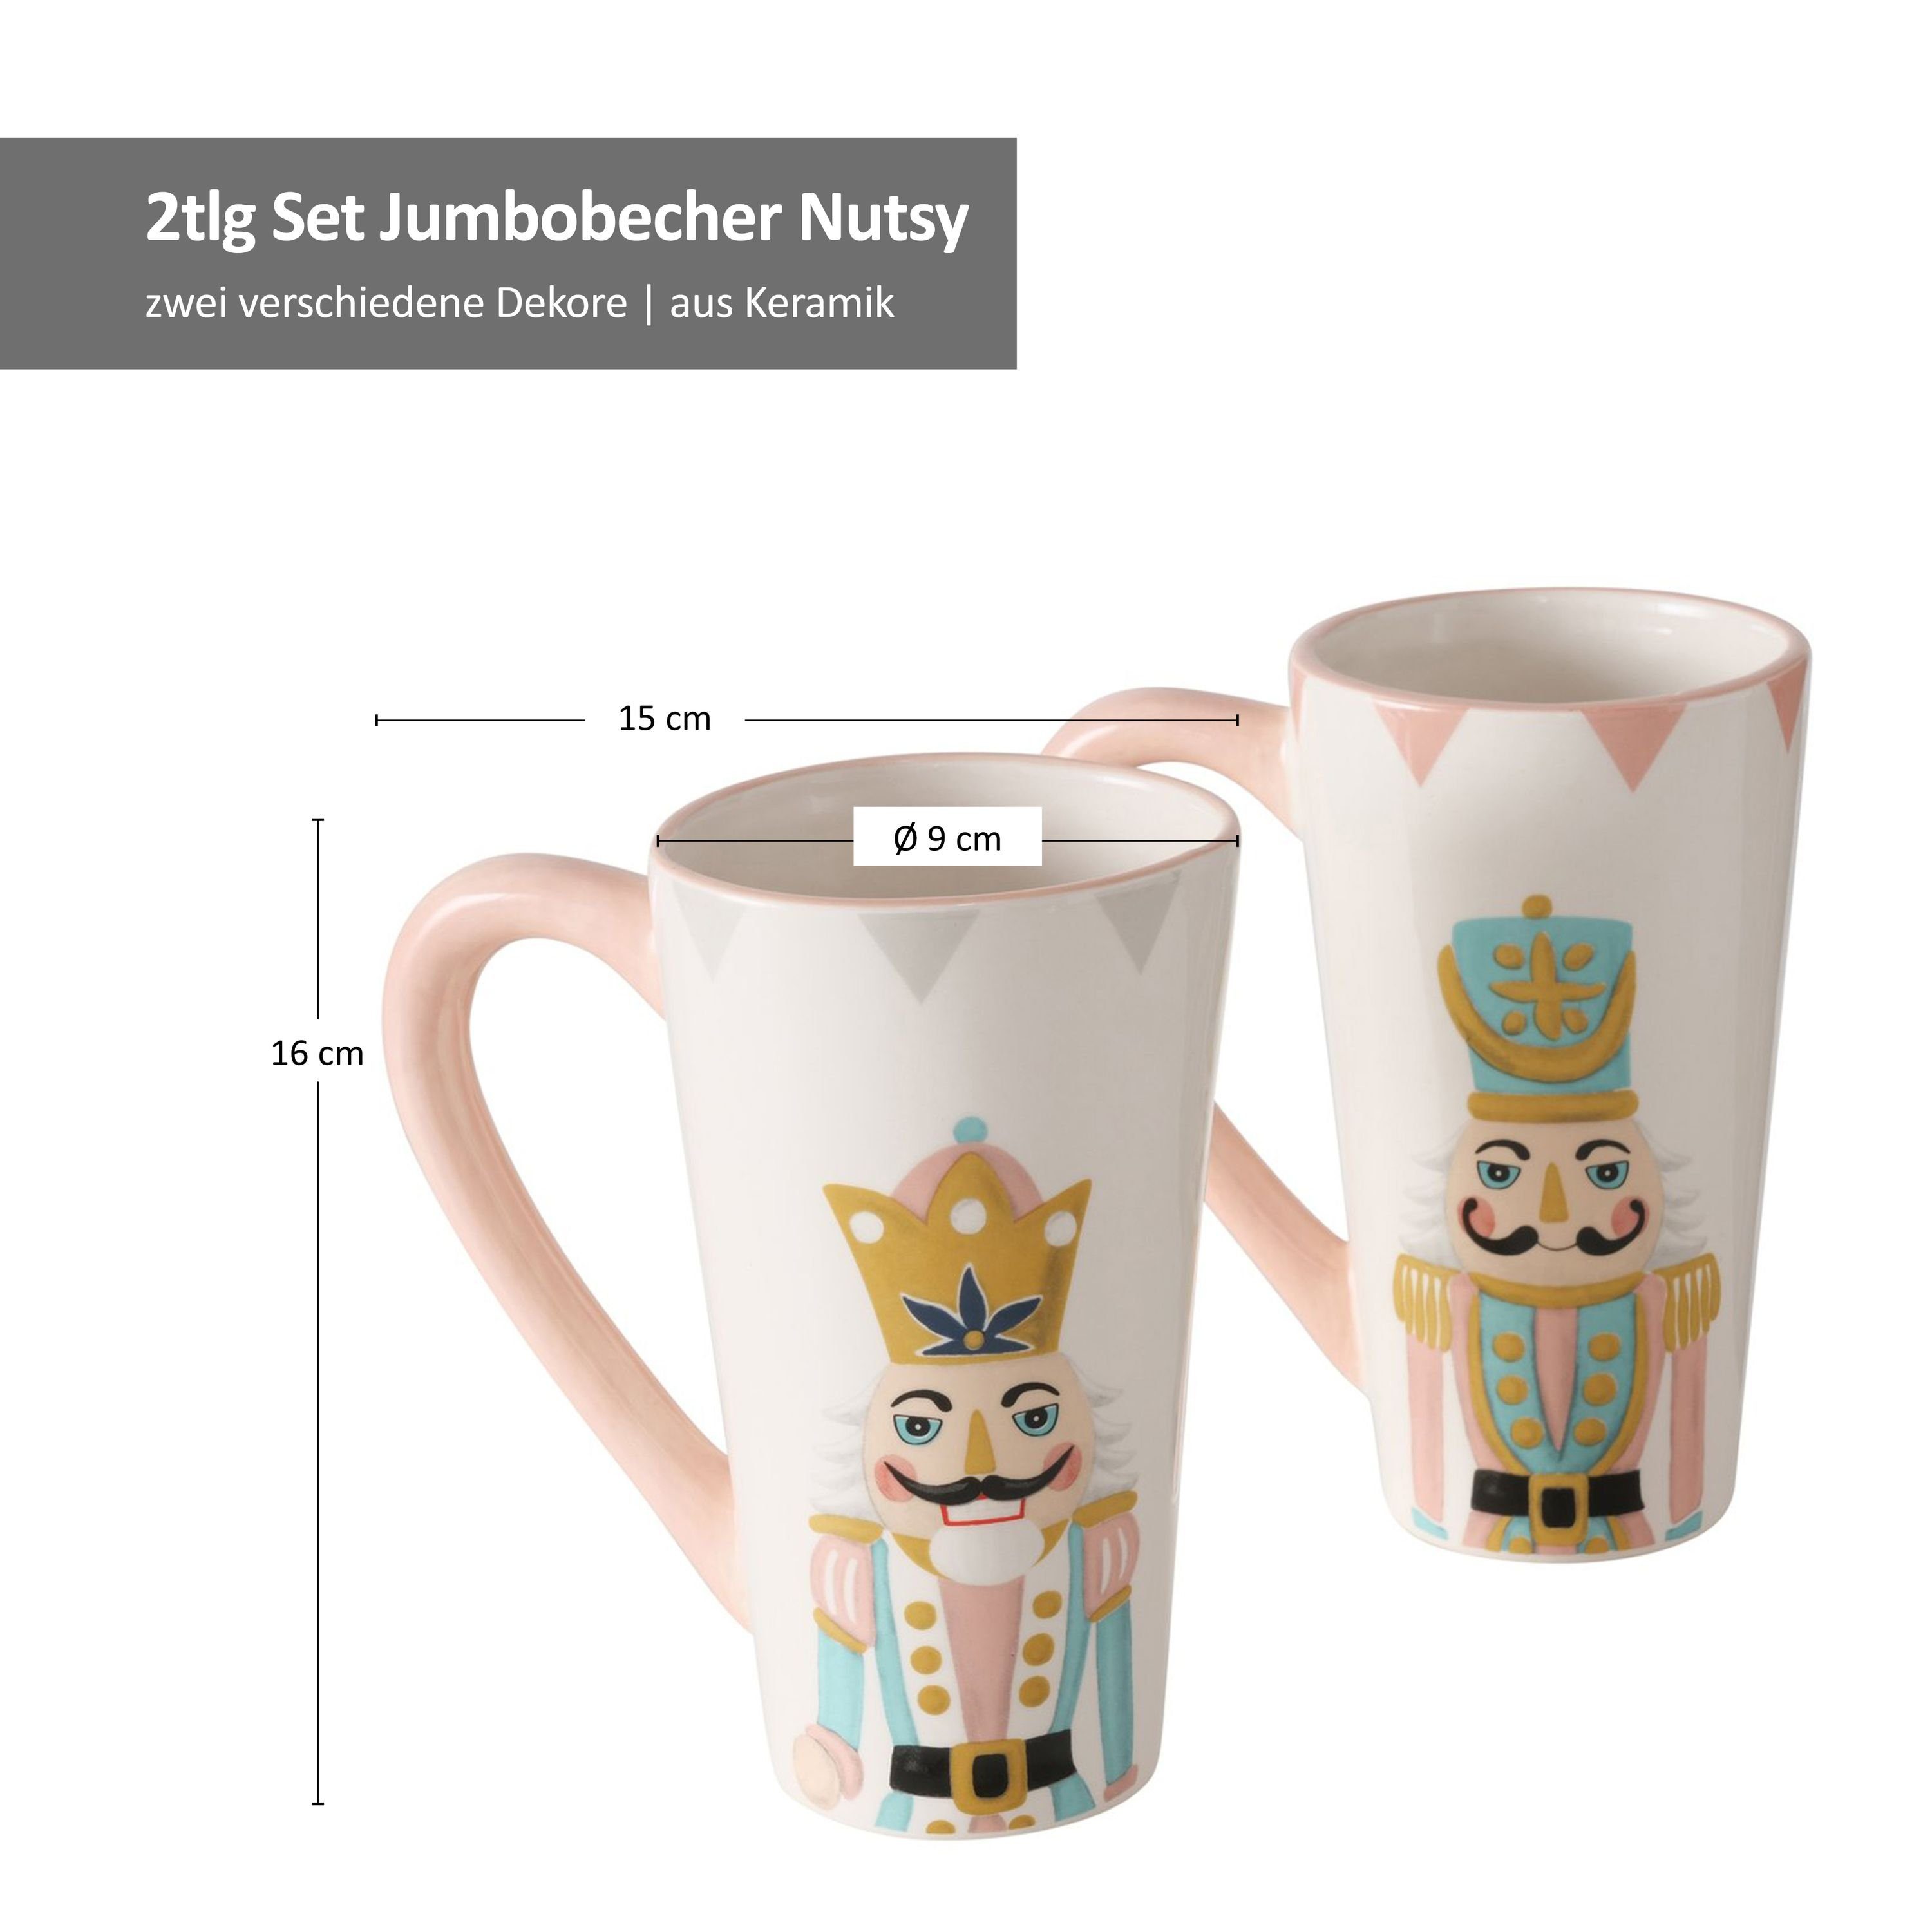 Keramik Nutsy 600ml Nussknacker 2tlg Kaffee-Tasse, Becher Jumbobecher Glühwein Set MamboCat